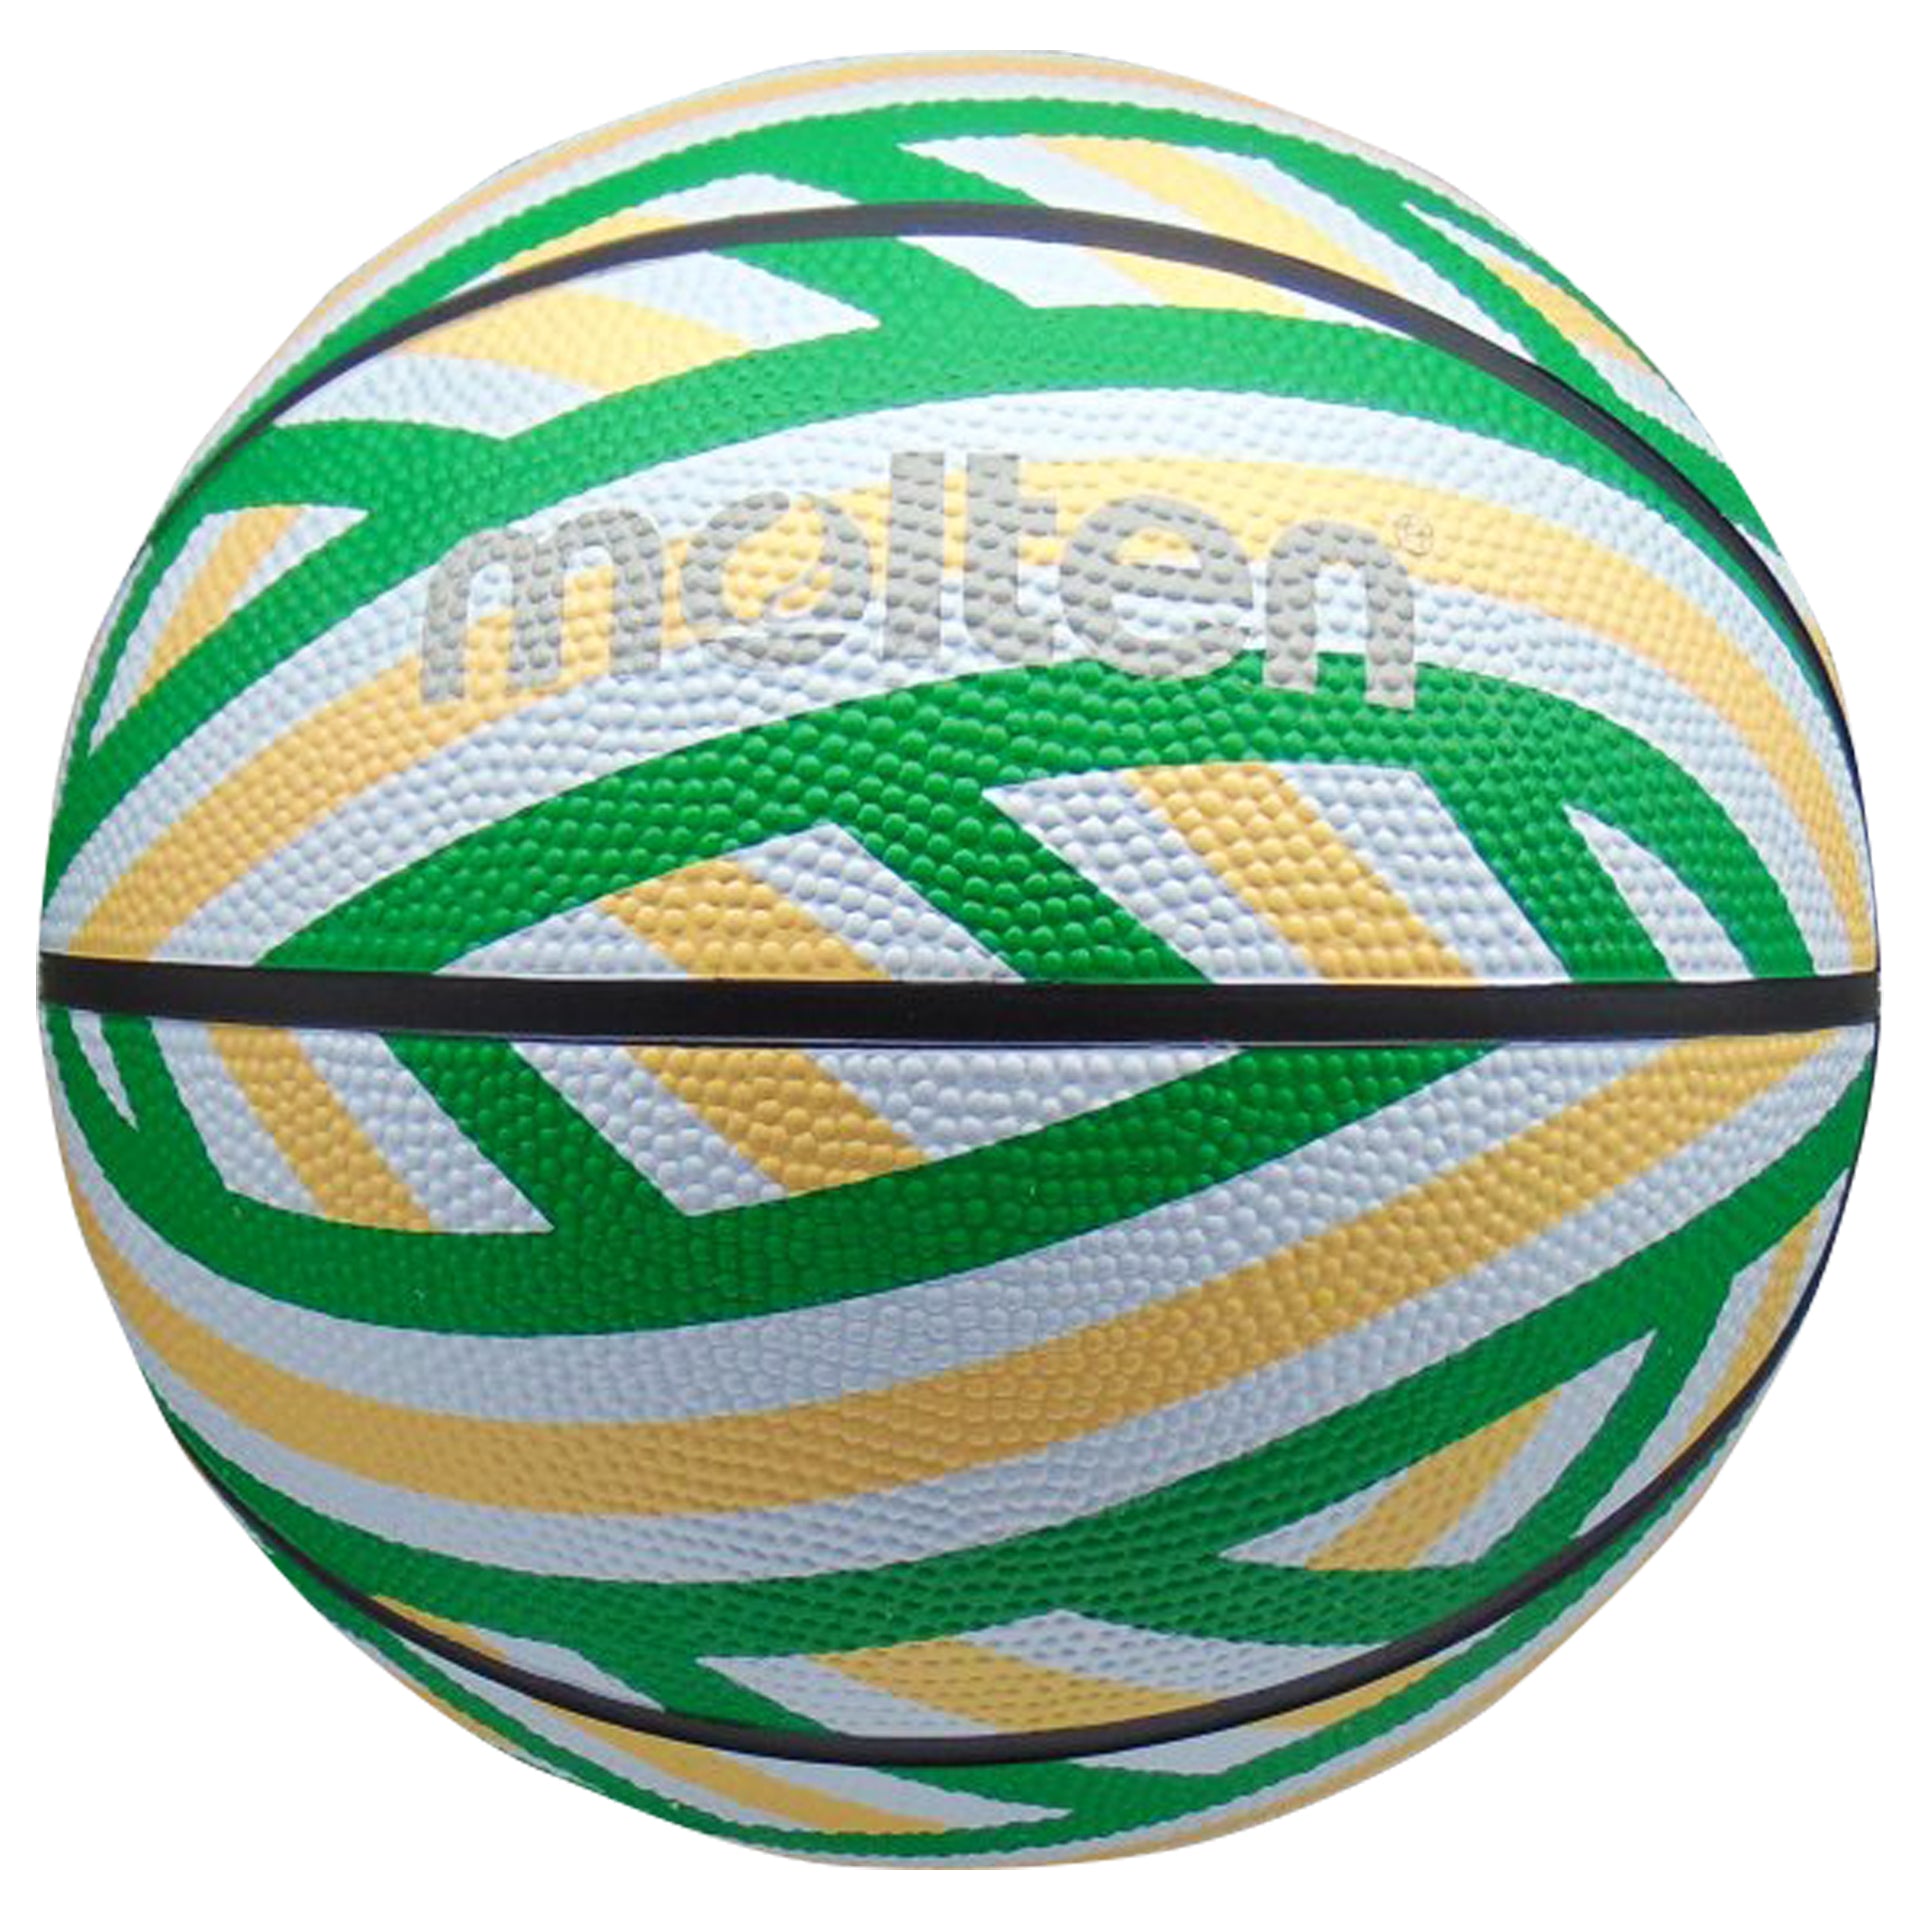 1602 Series Basketball - Green/Yellow